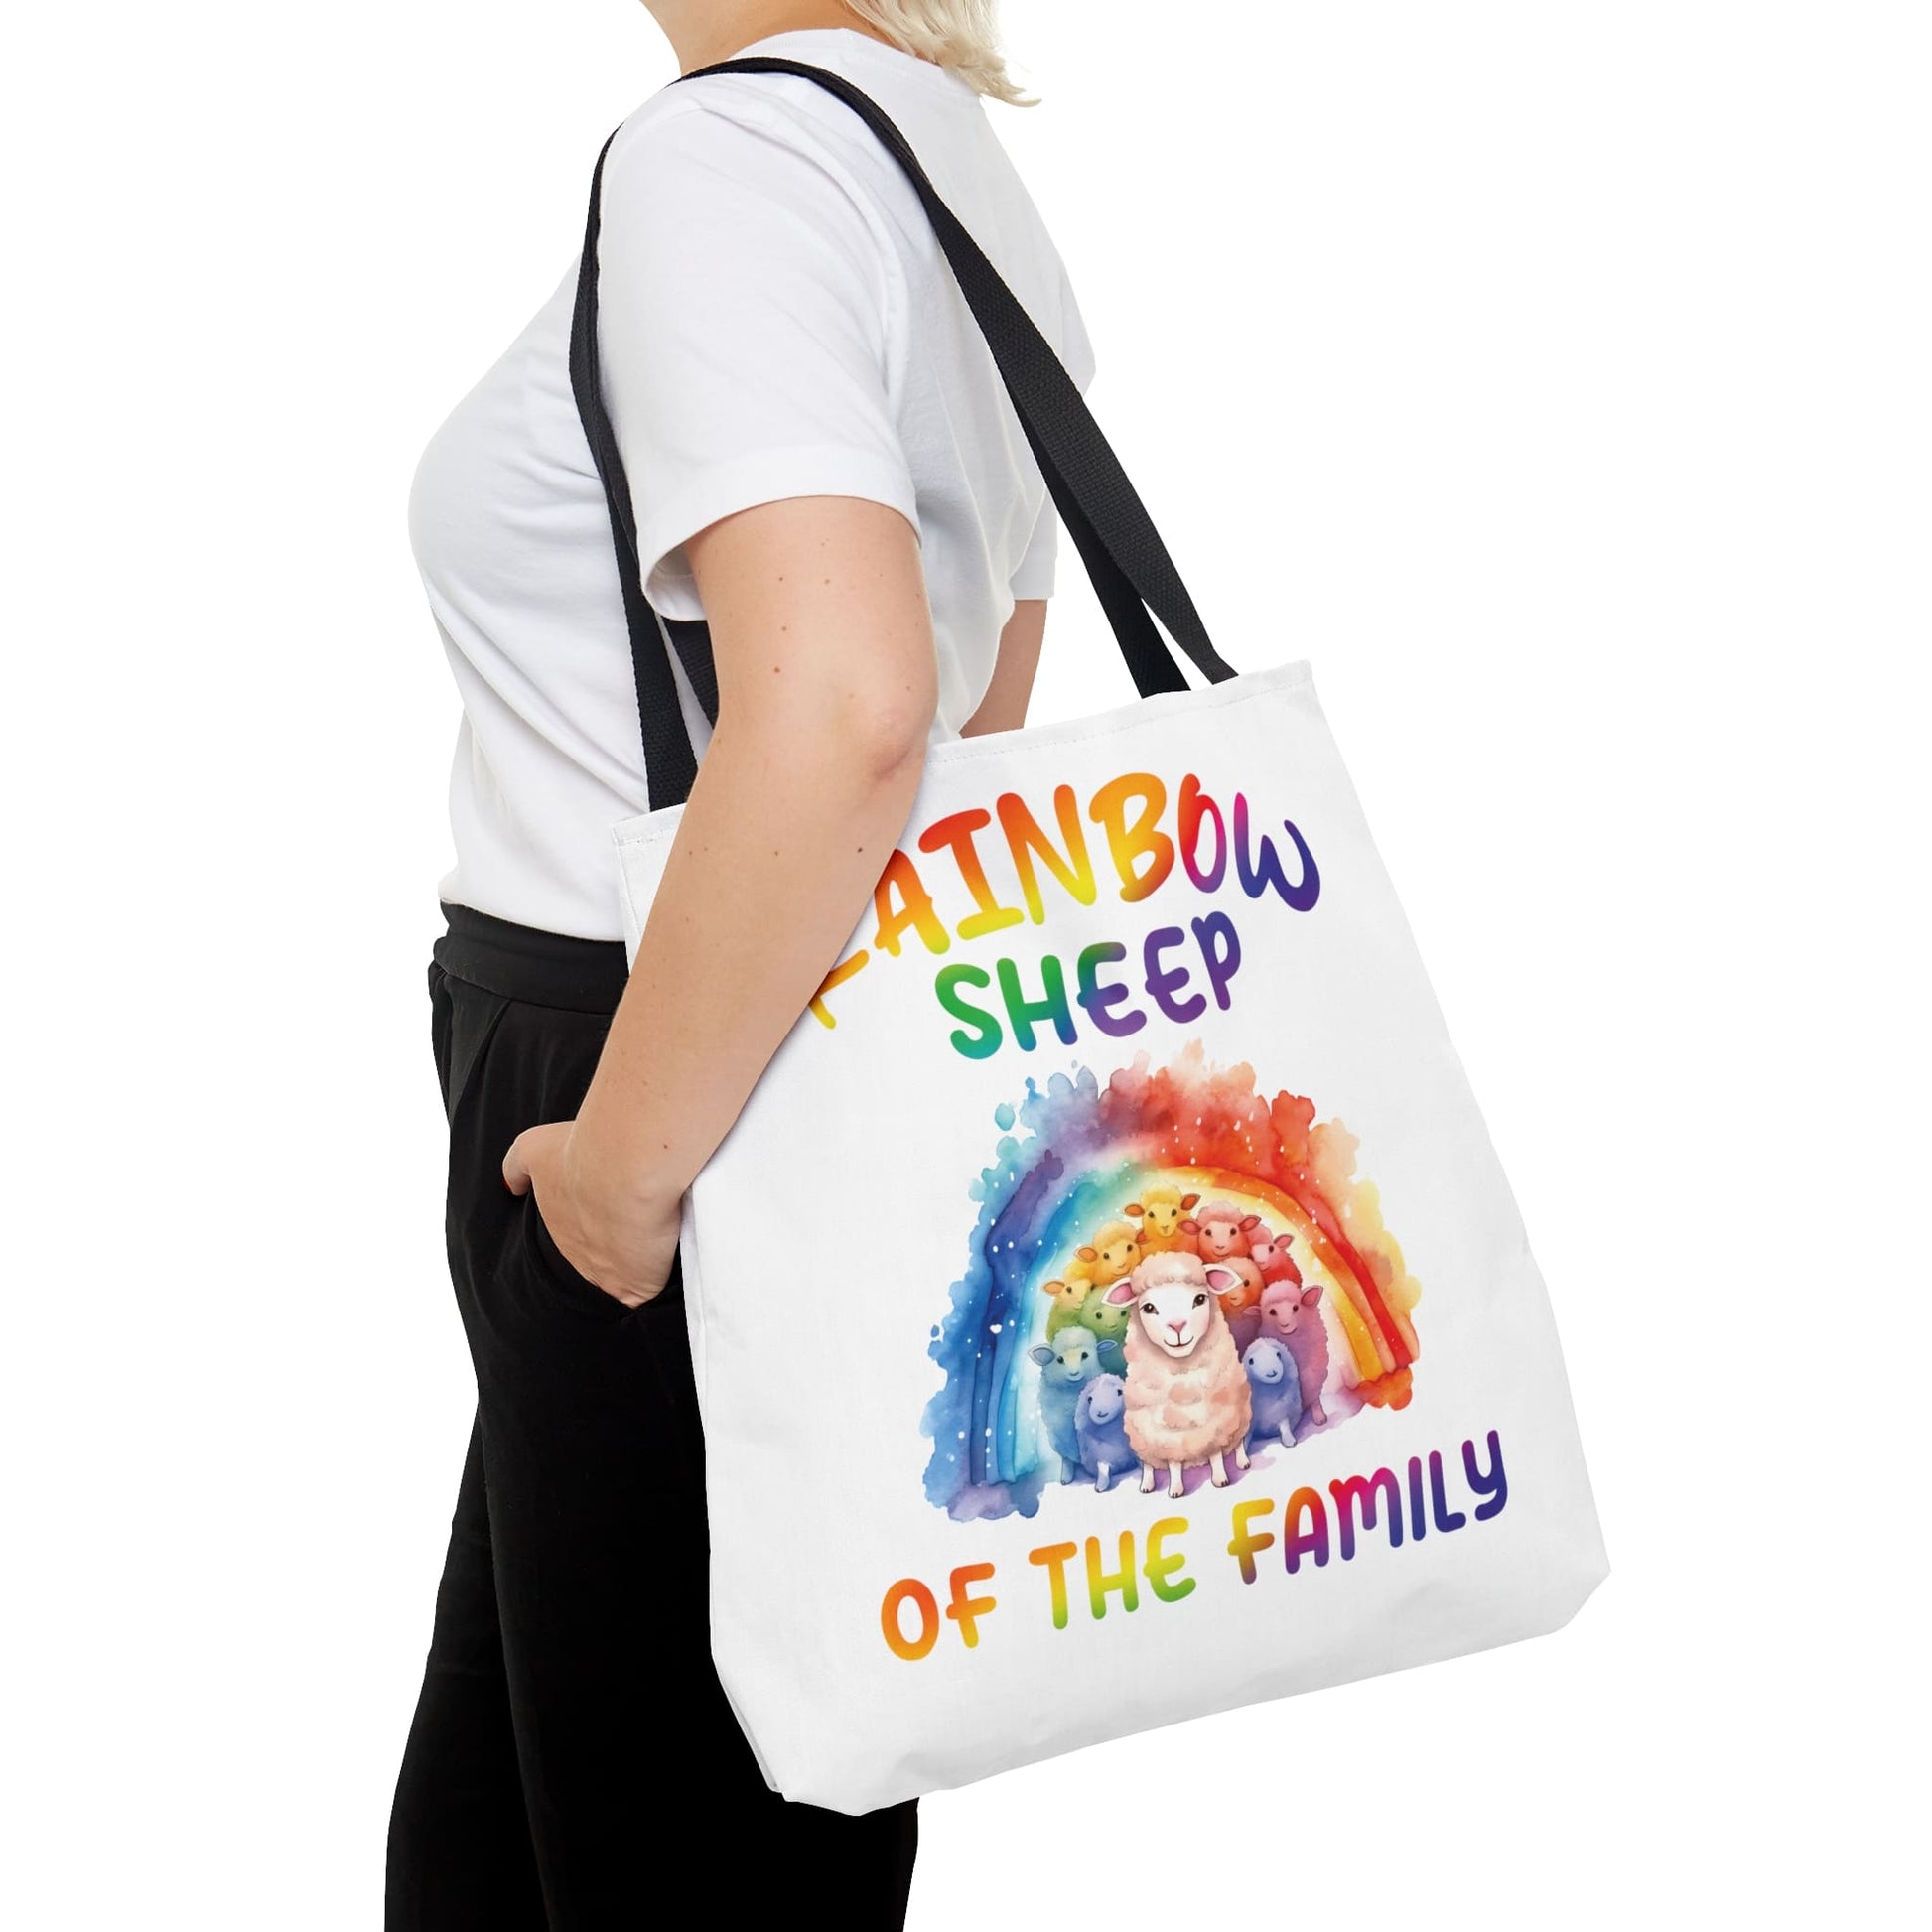 LGBTQ pride tote bag, rainbow sheep of the family bag, large